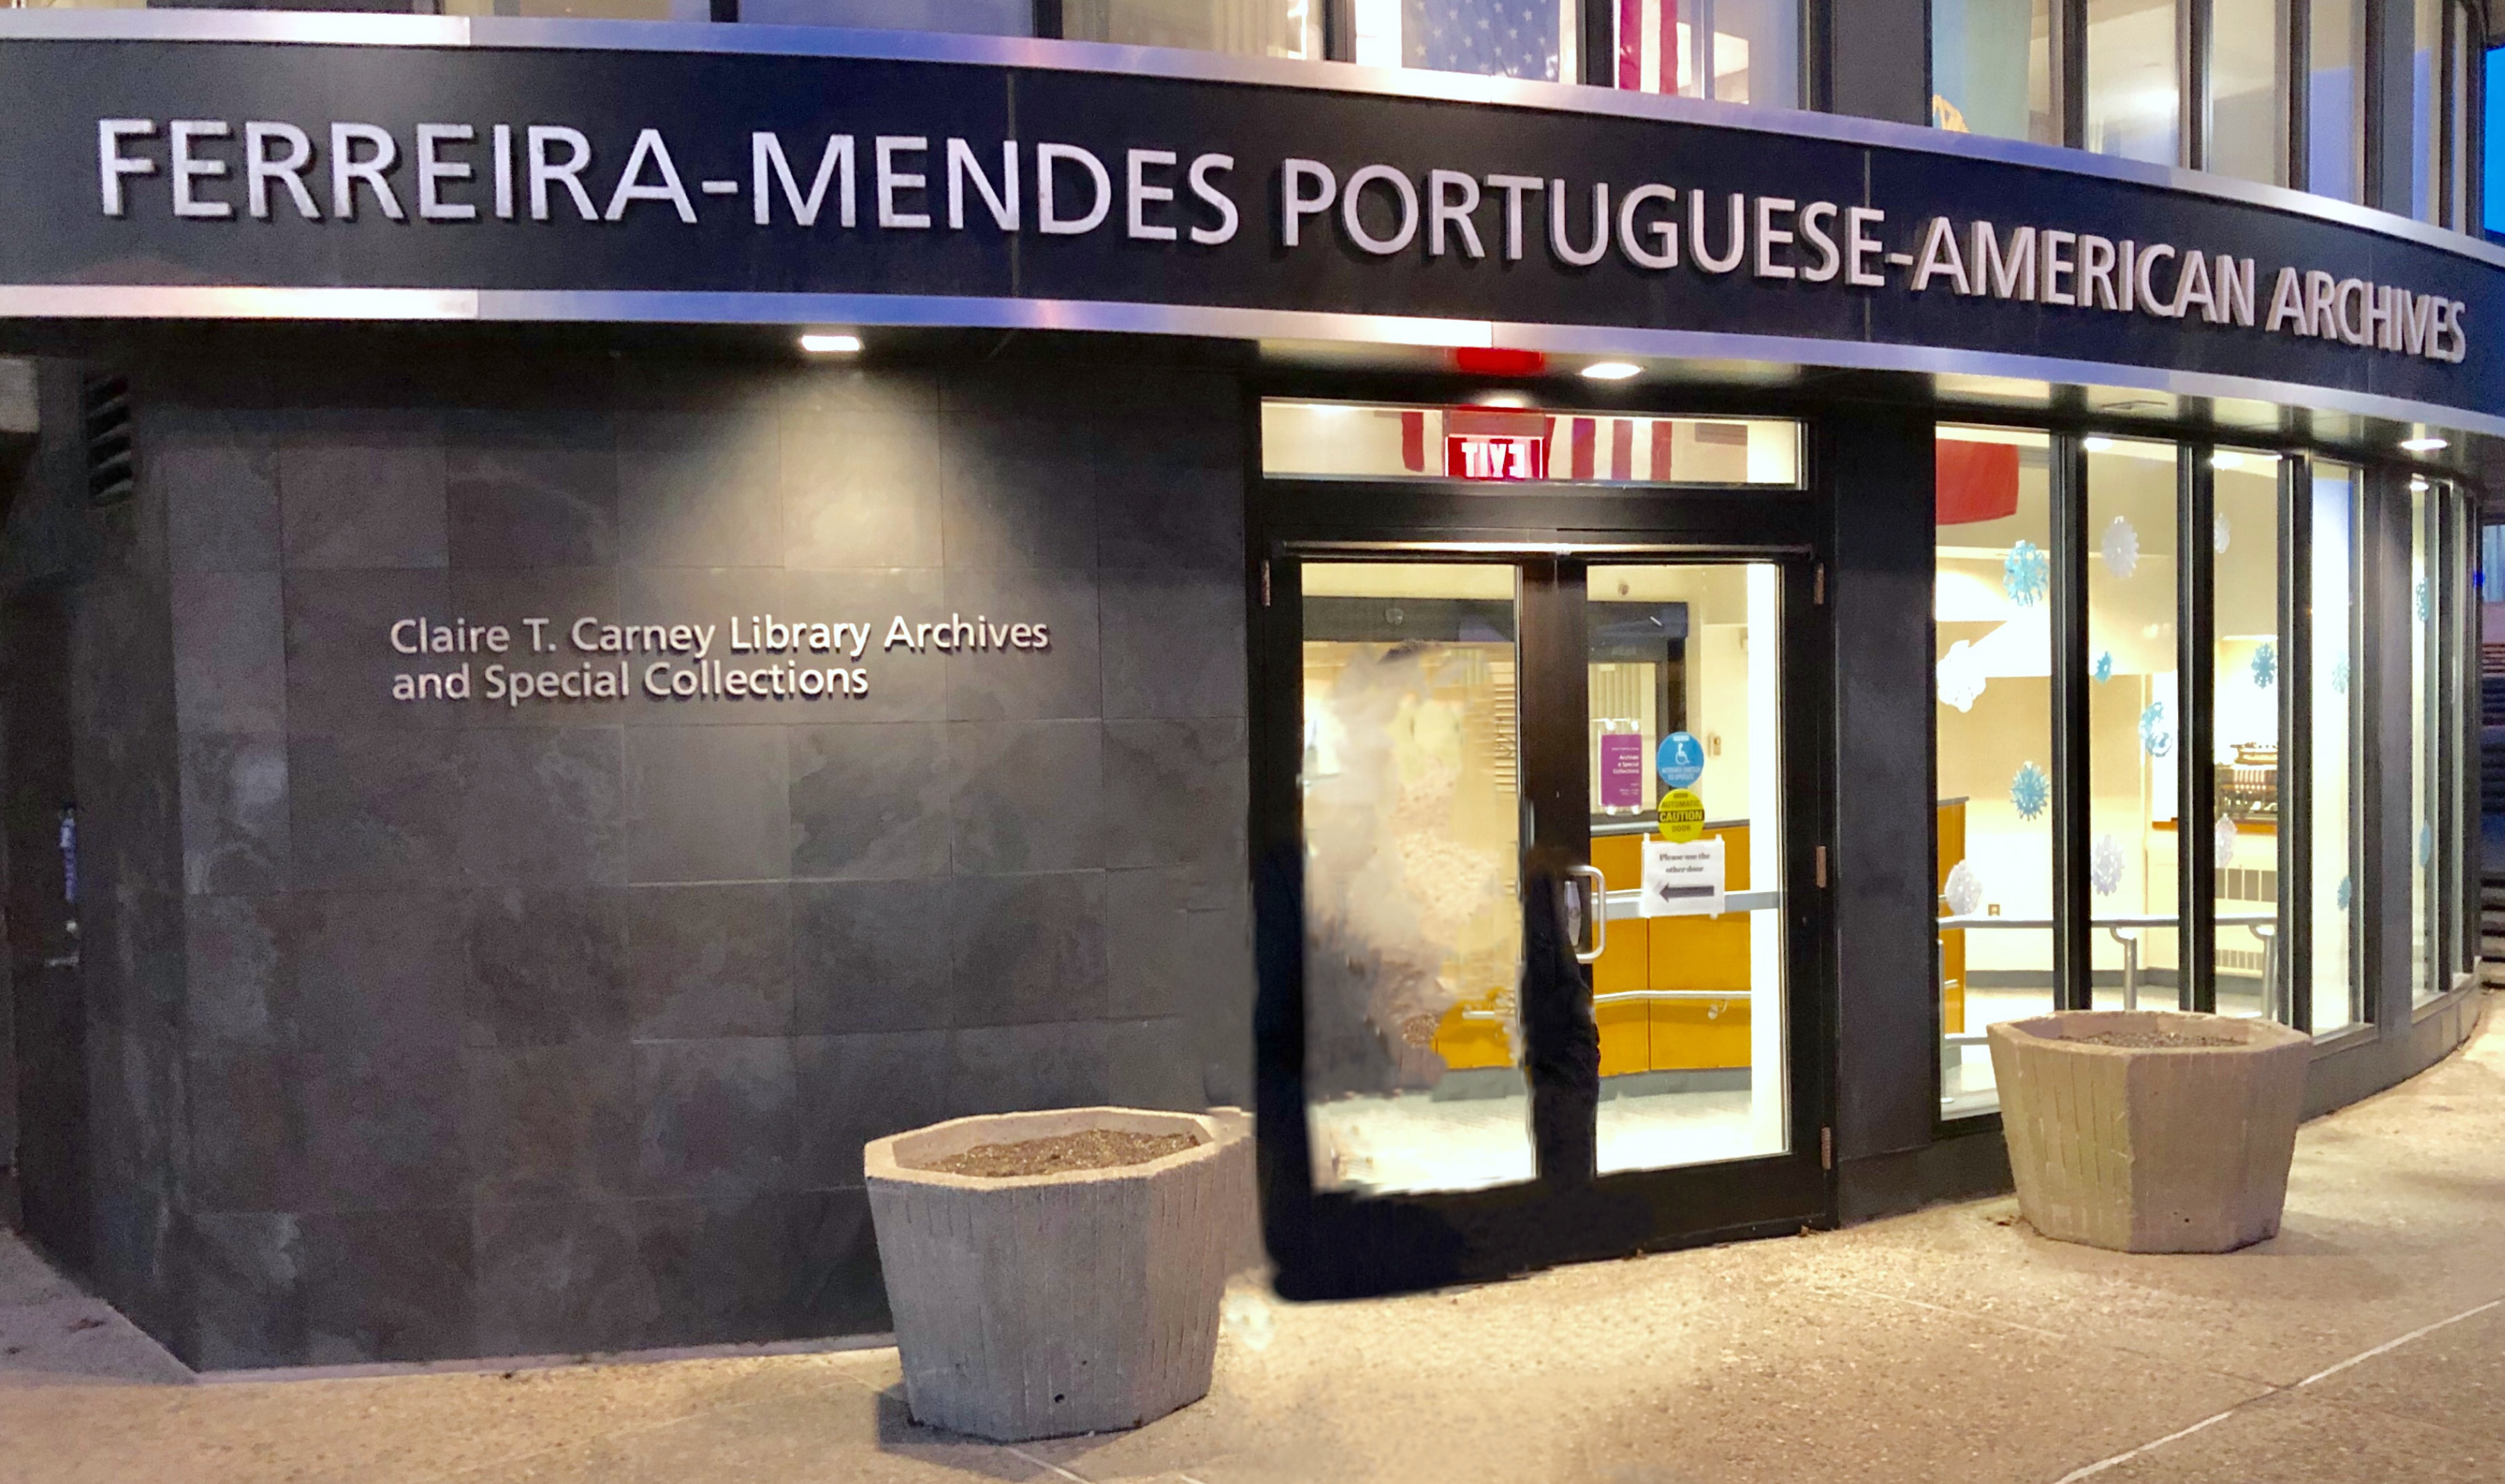 Ferreira Mendes Portuguese-Amenrican Archives